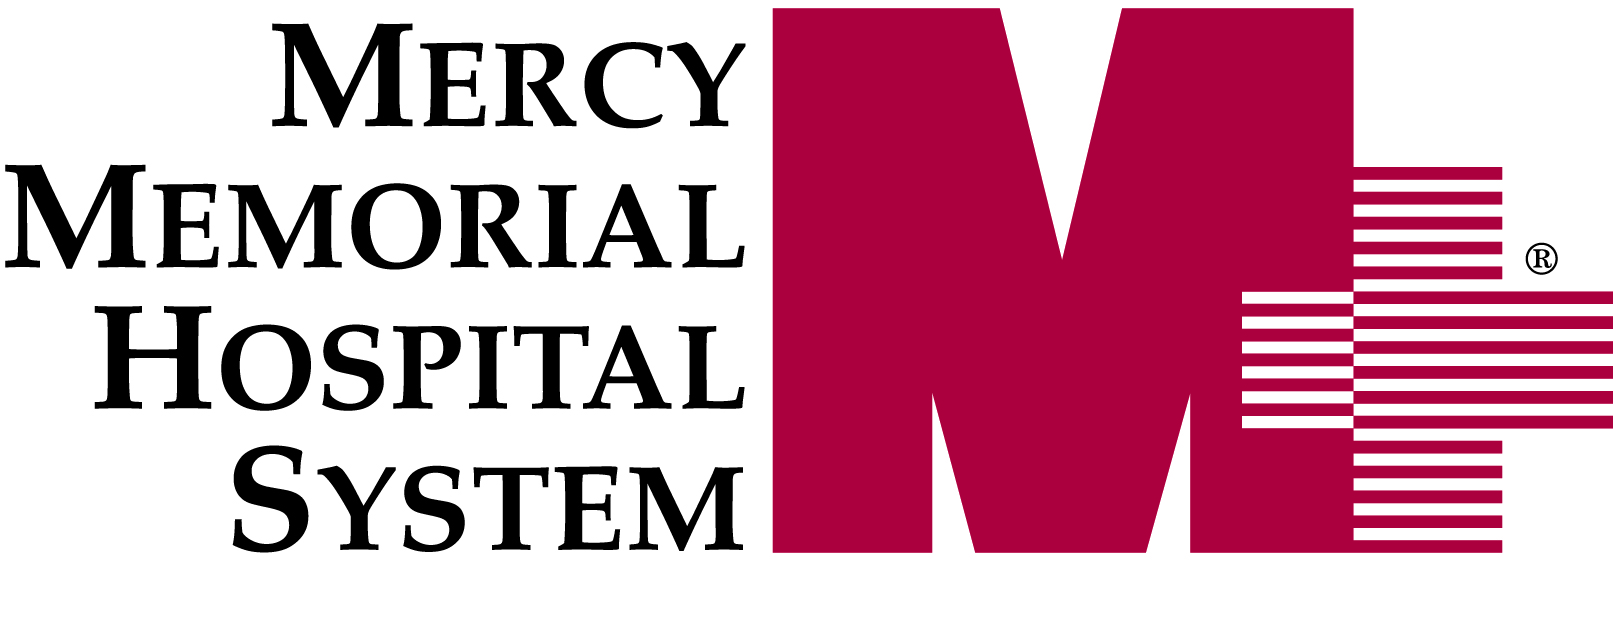 Mercy Memorial Hospital System logo